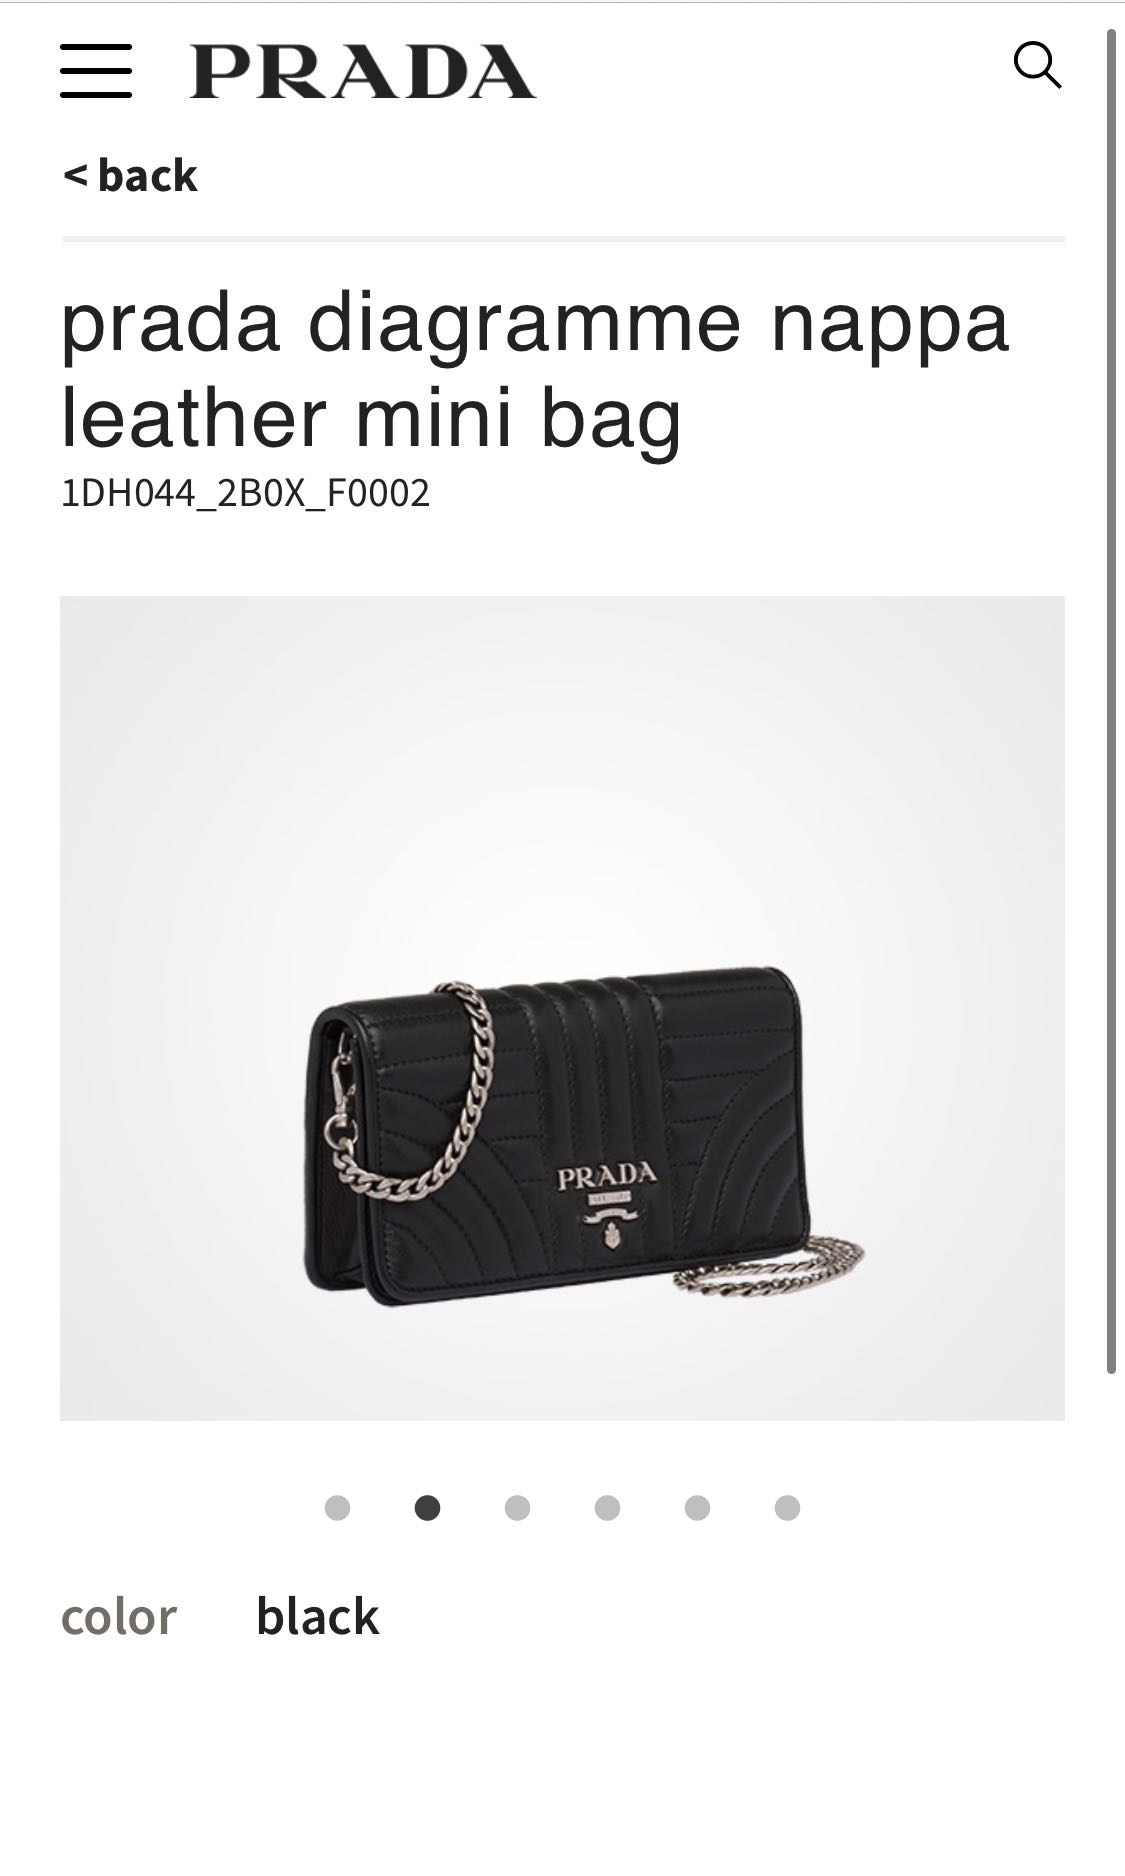 prada diagramme nappa leather mini bag